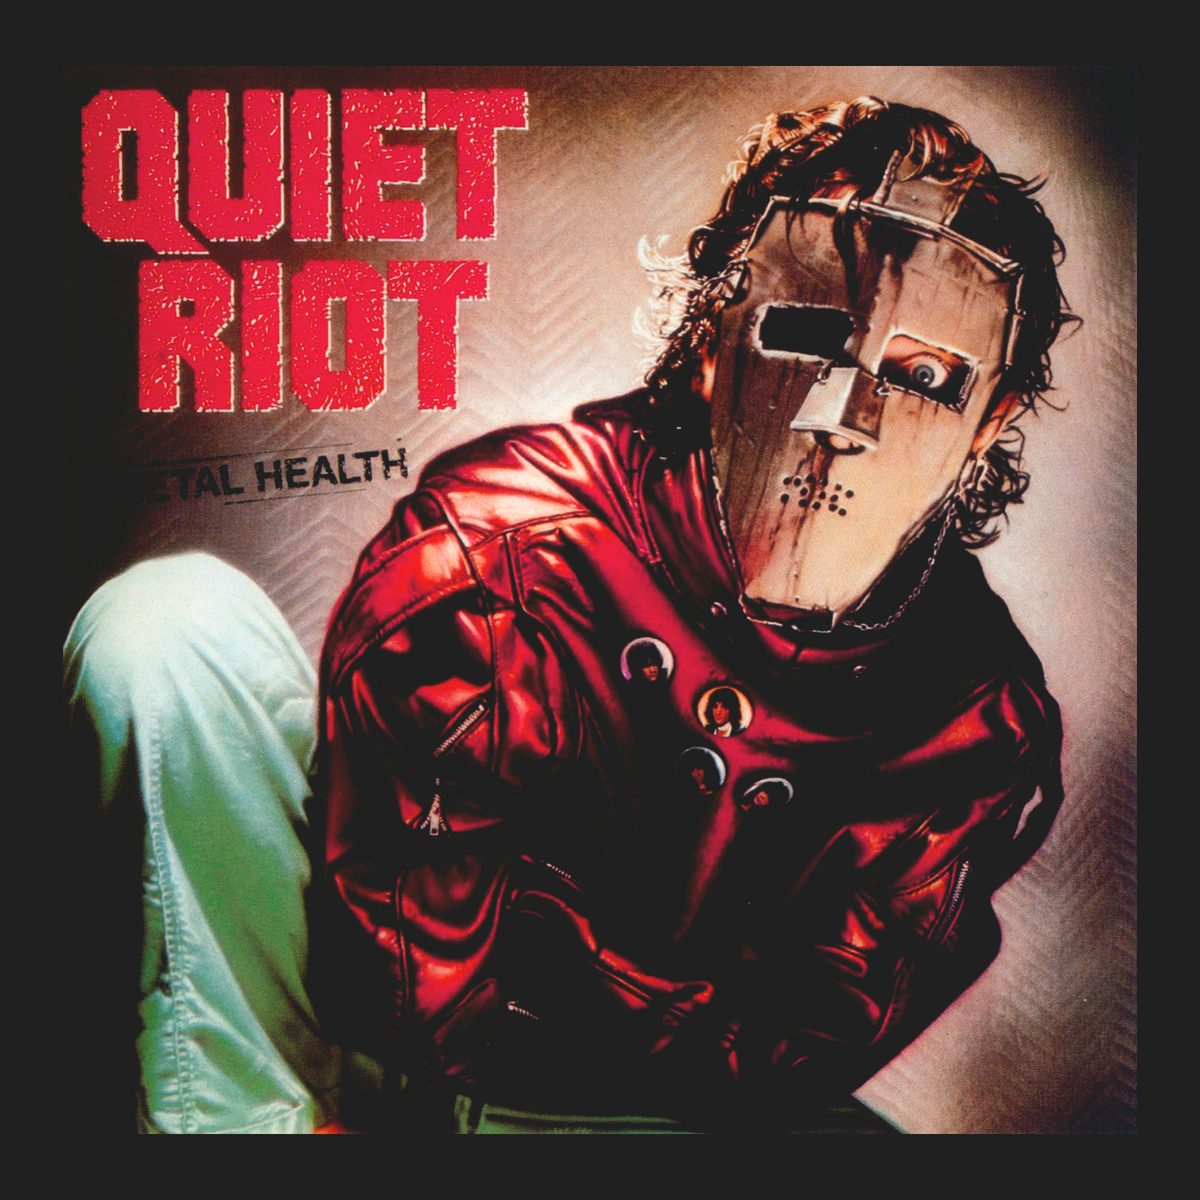 Quiet Riot Metal Health Men's T Shirt Album Cover Heavy Metal Rock Band Tour Top 